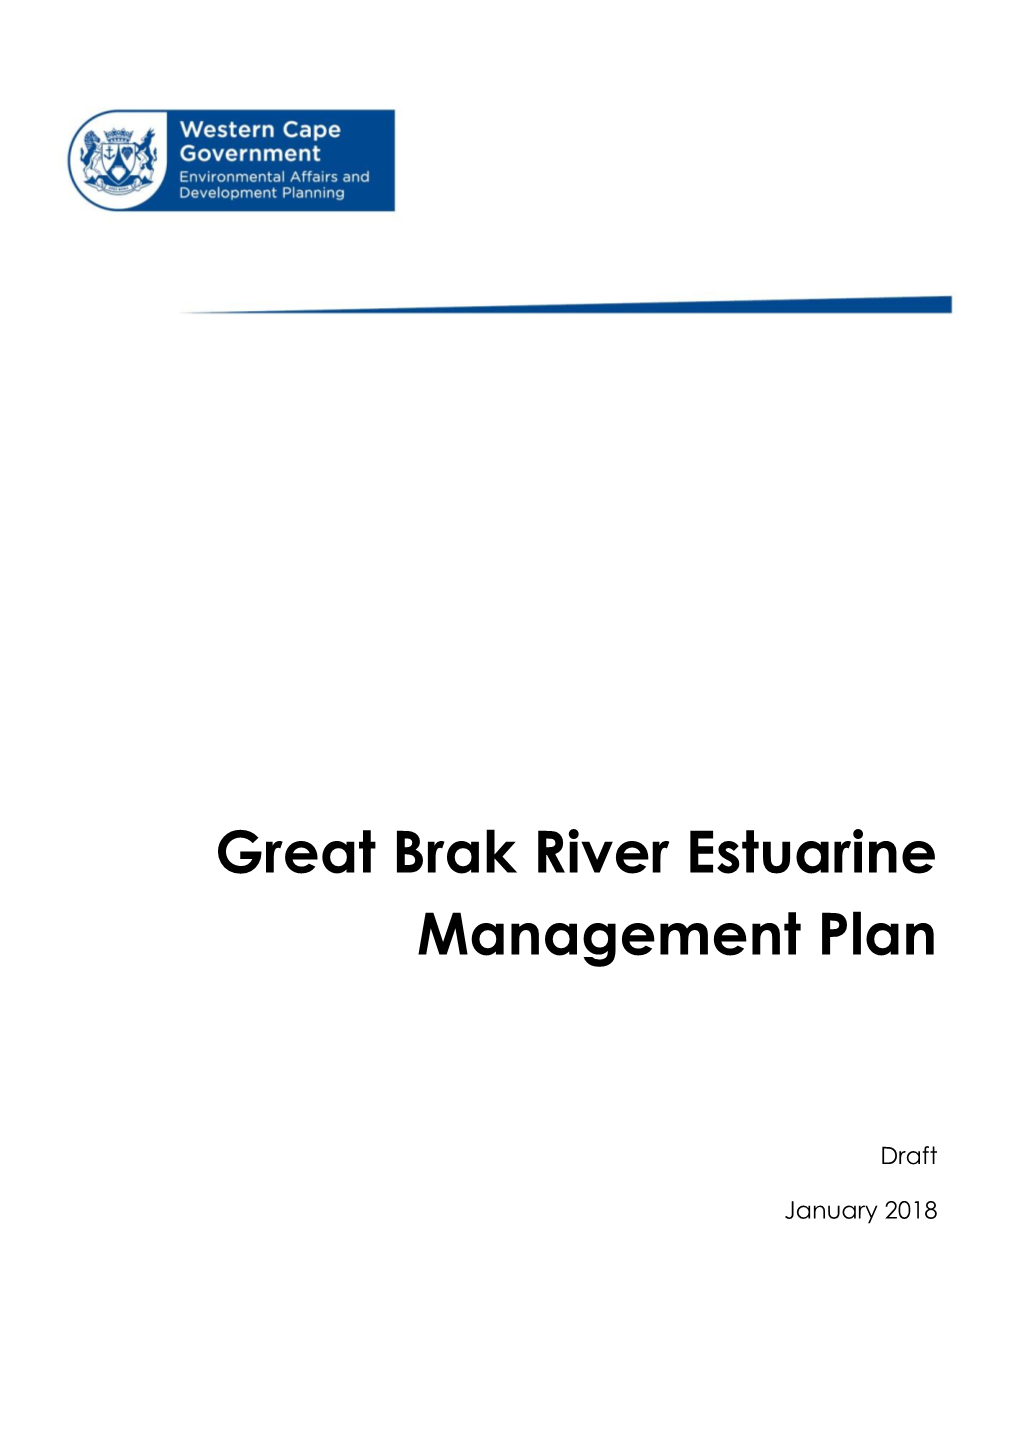 Great Brak River Estuarine Management Plan